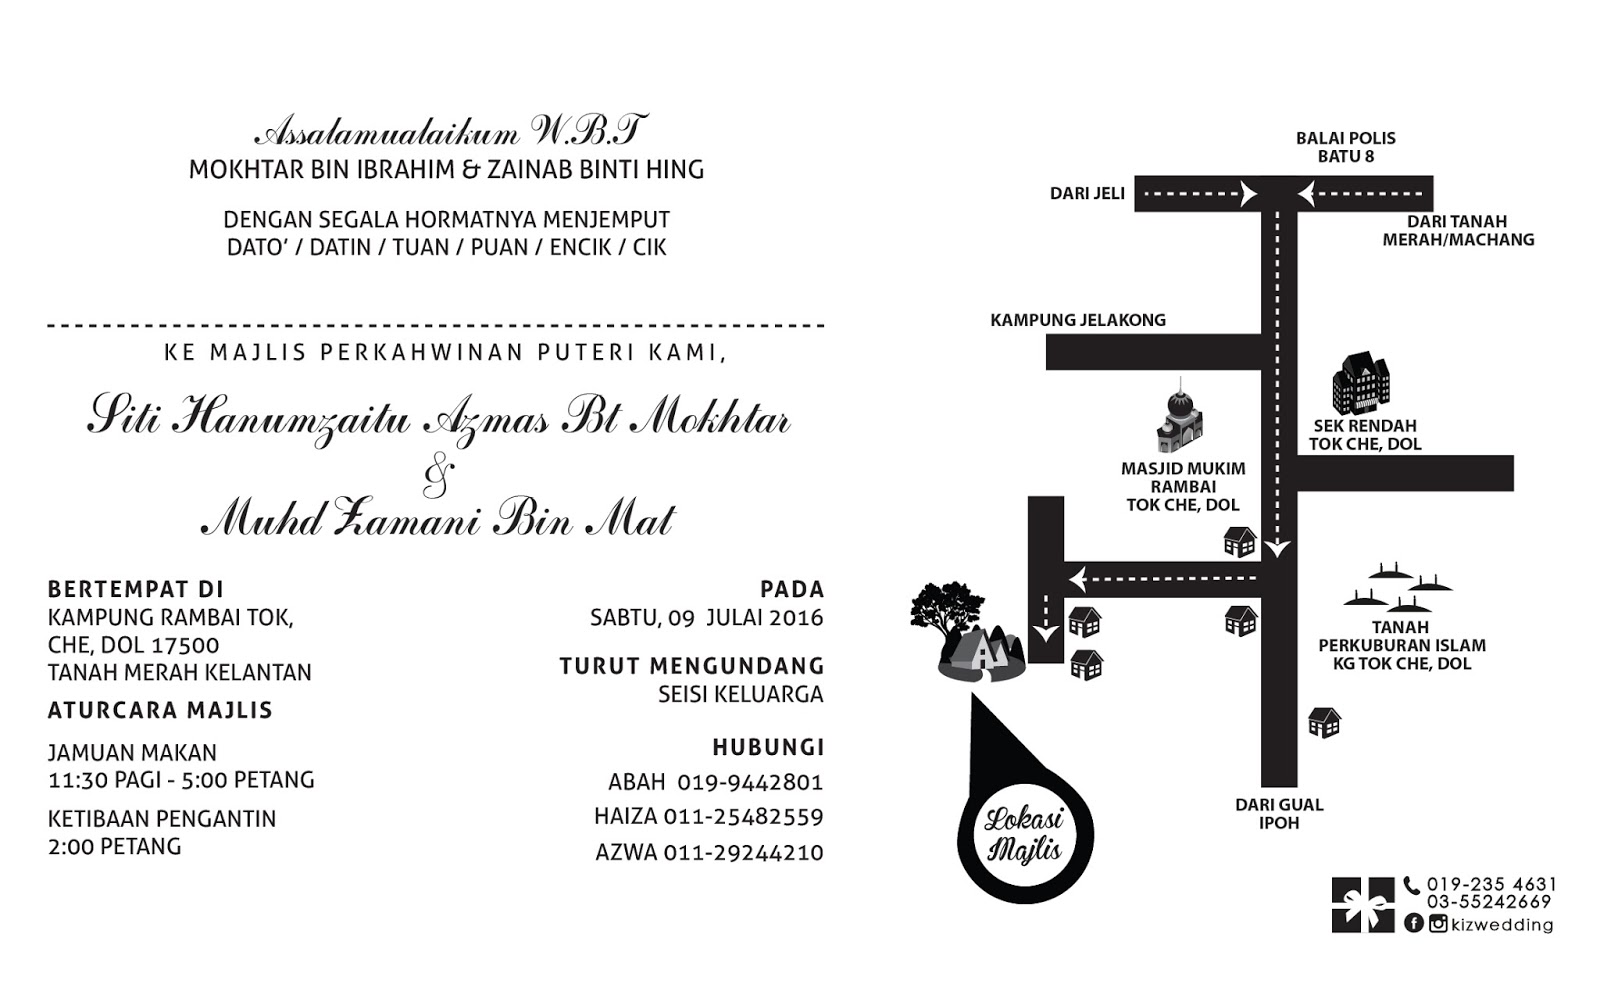 Kiz Wedding: Contoh Design Kad Kahwin Terbaru Siti Dan Zamani